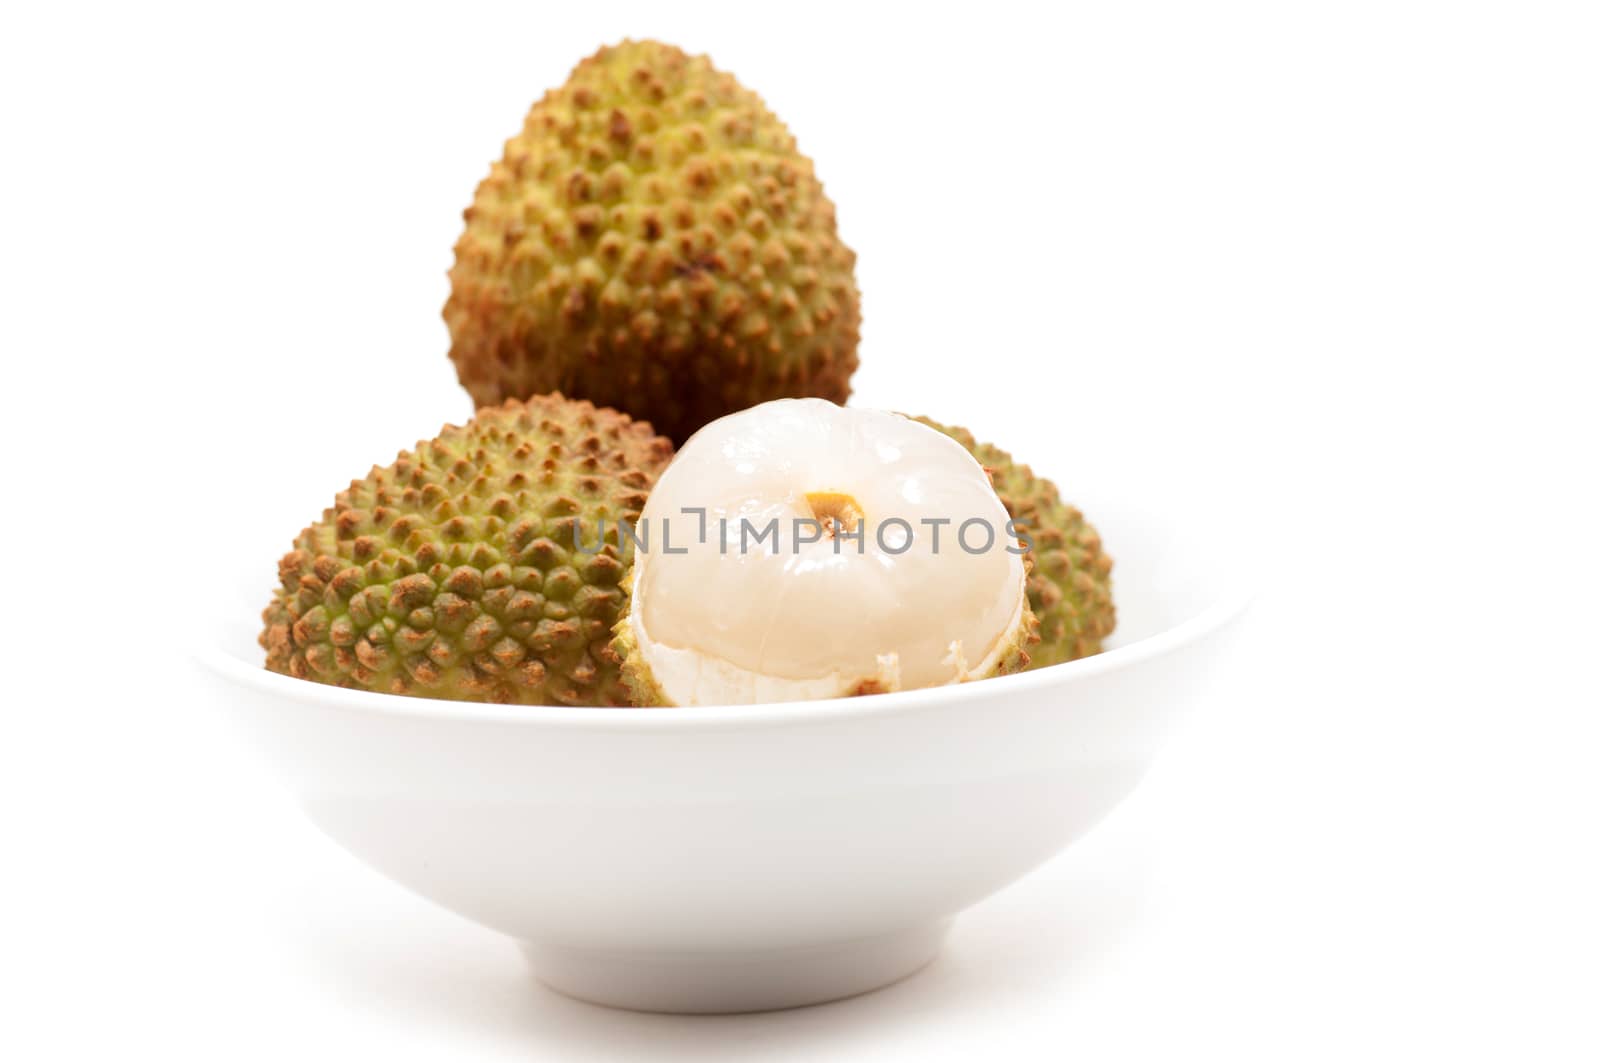 Litchi fruits by daoleduc